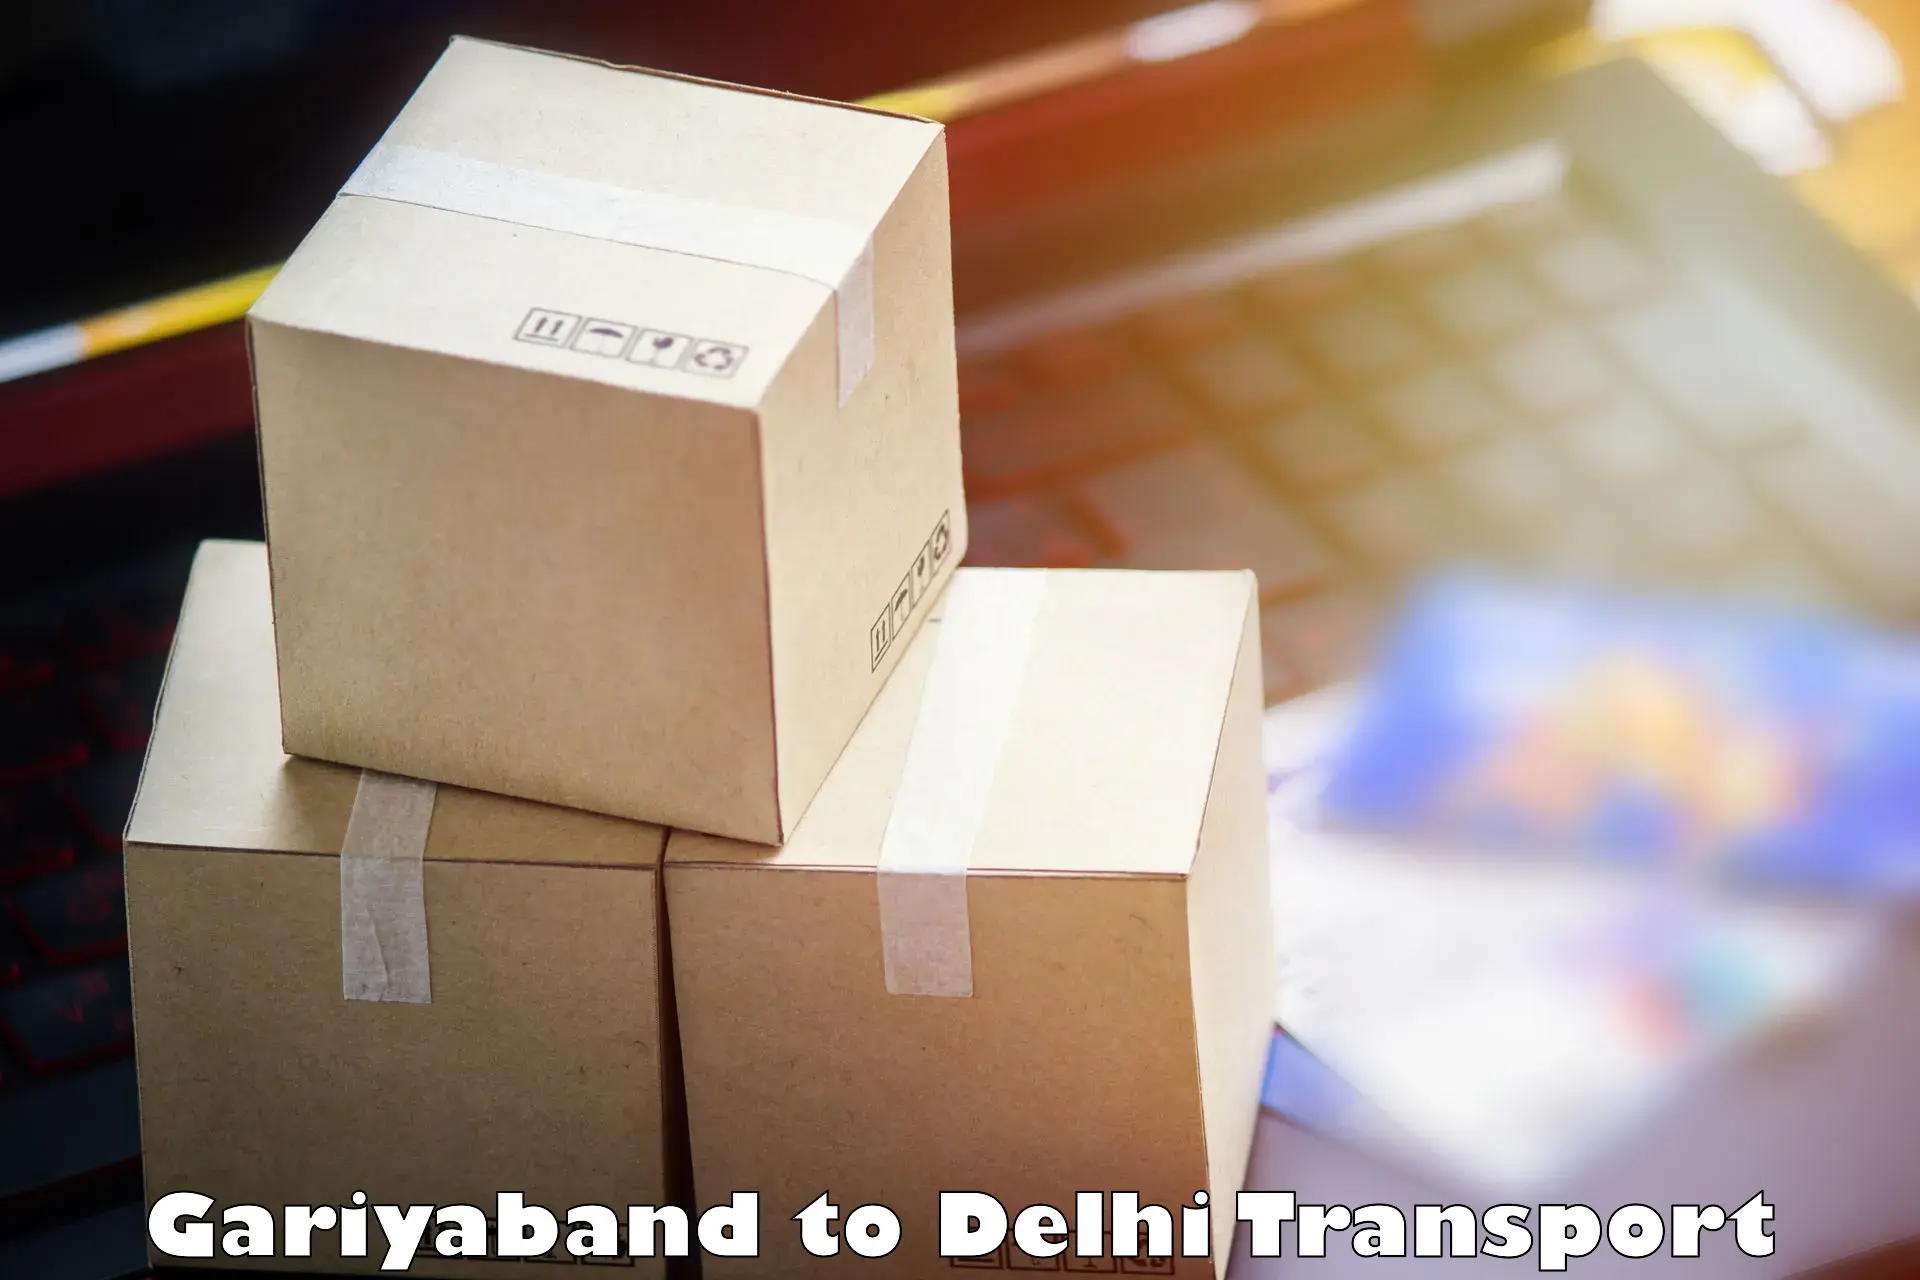 Daily transport service Gariyaband to East Delhi